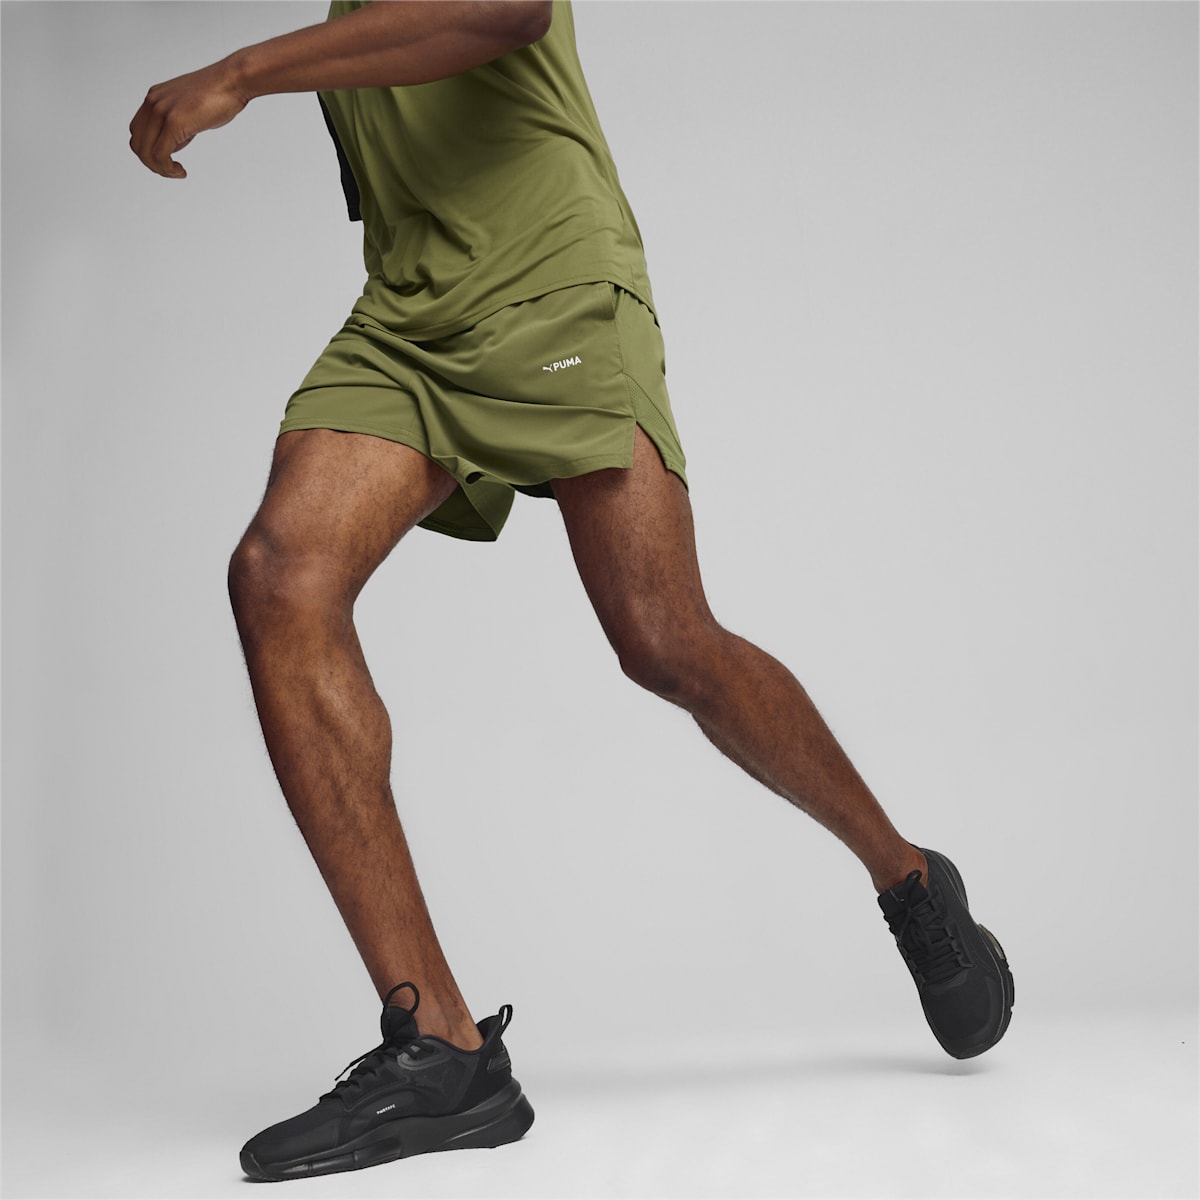 5" Men's Ultrabreathe Stretch Training Shorts